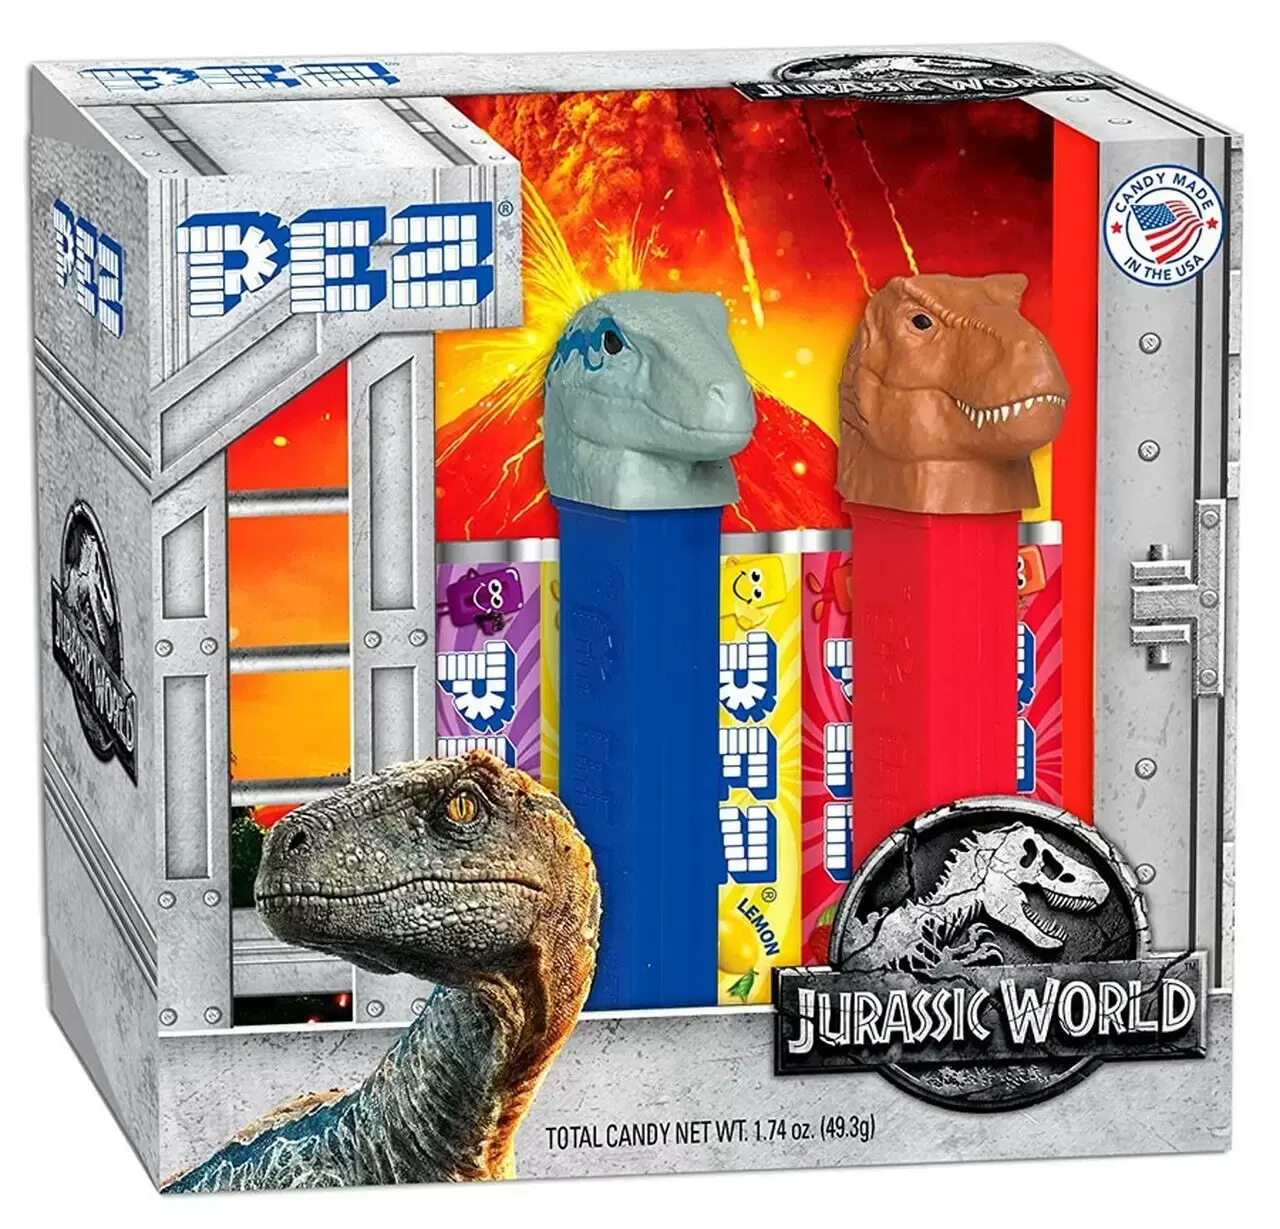 PEZ - Jurassic World Gift Set